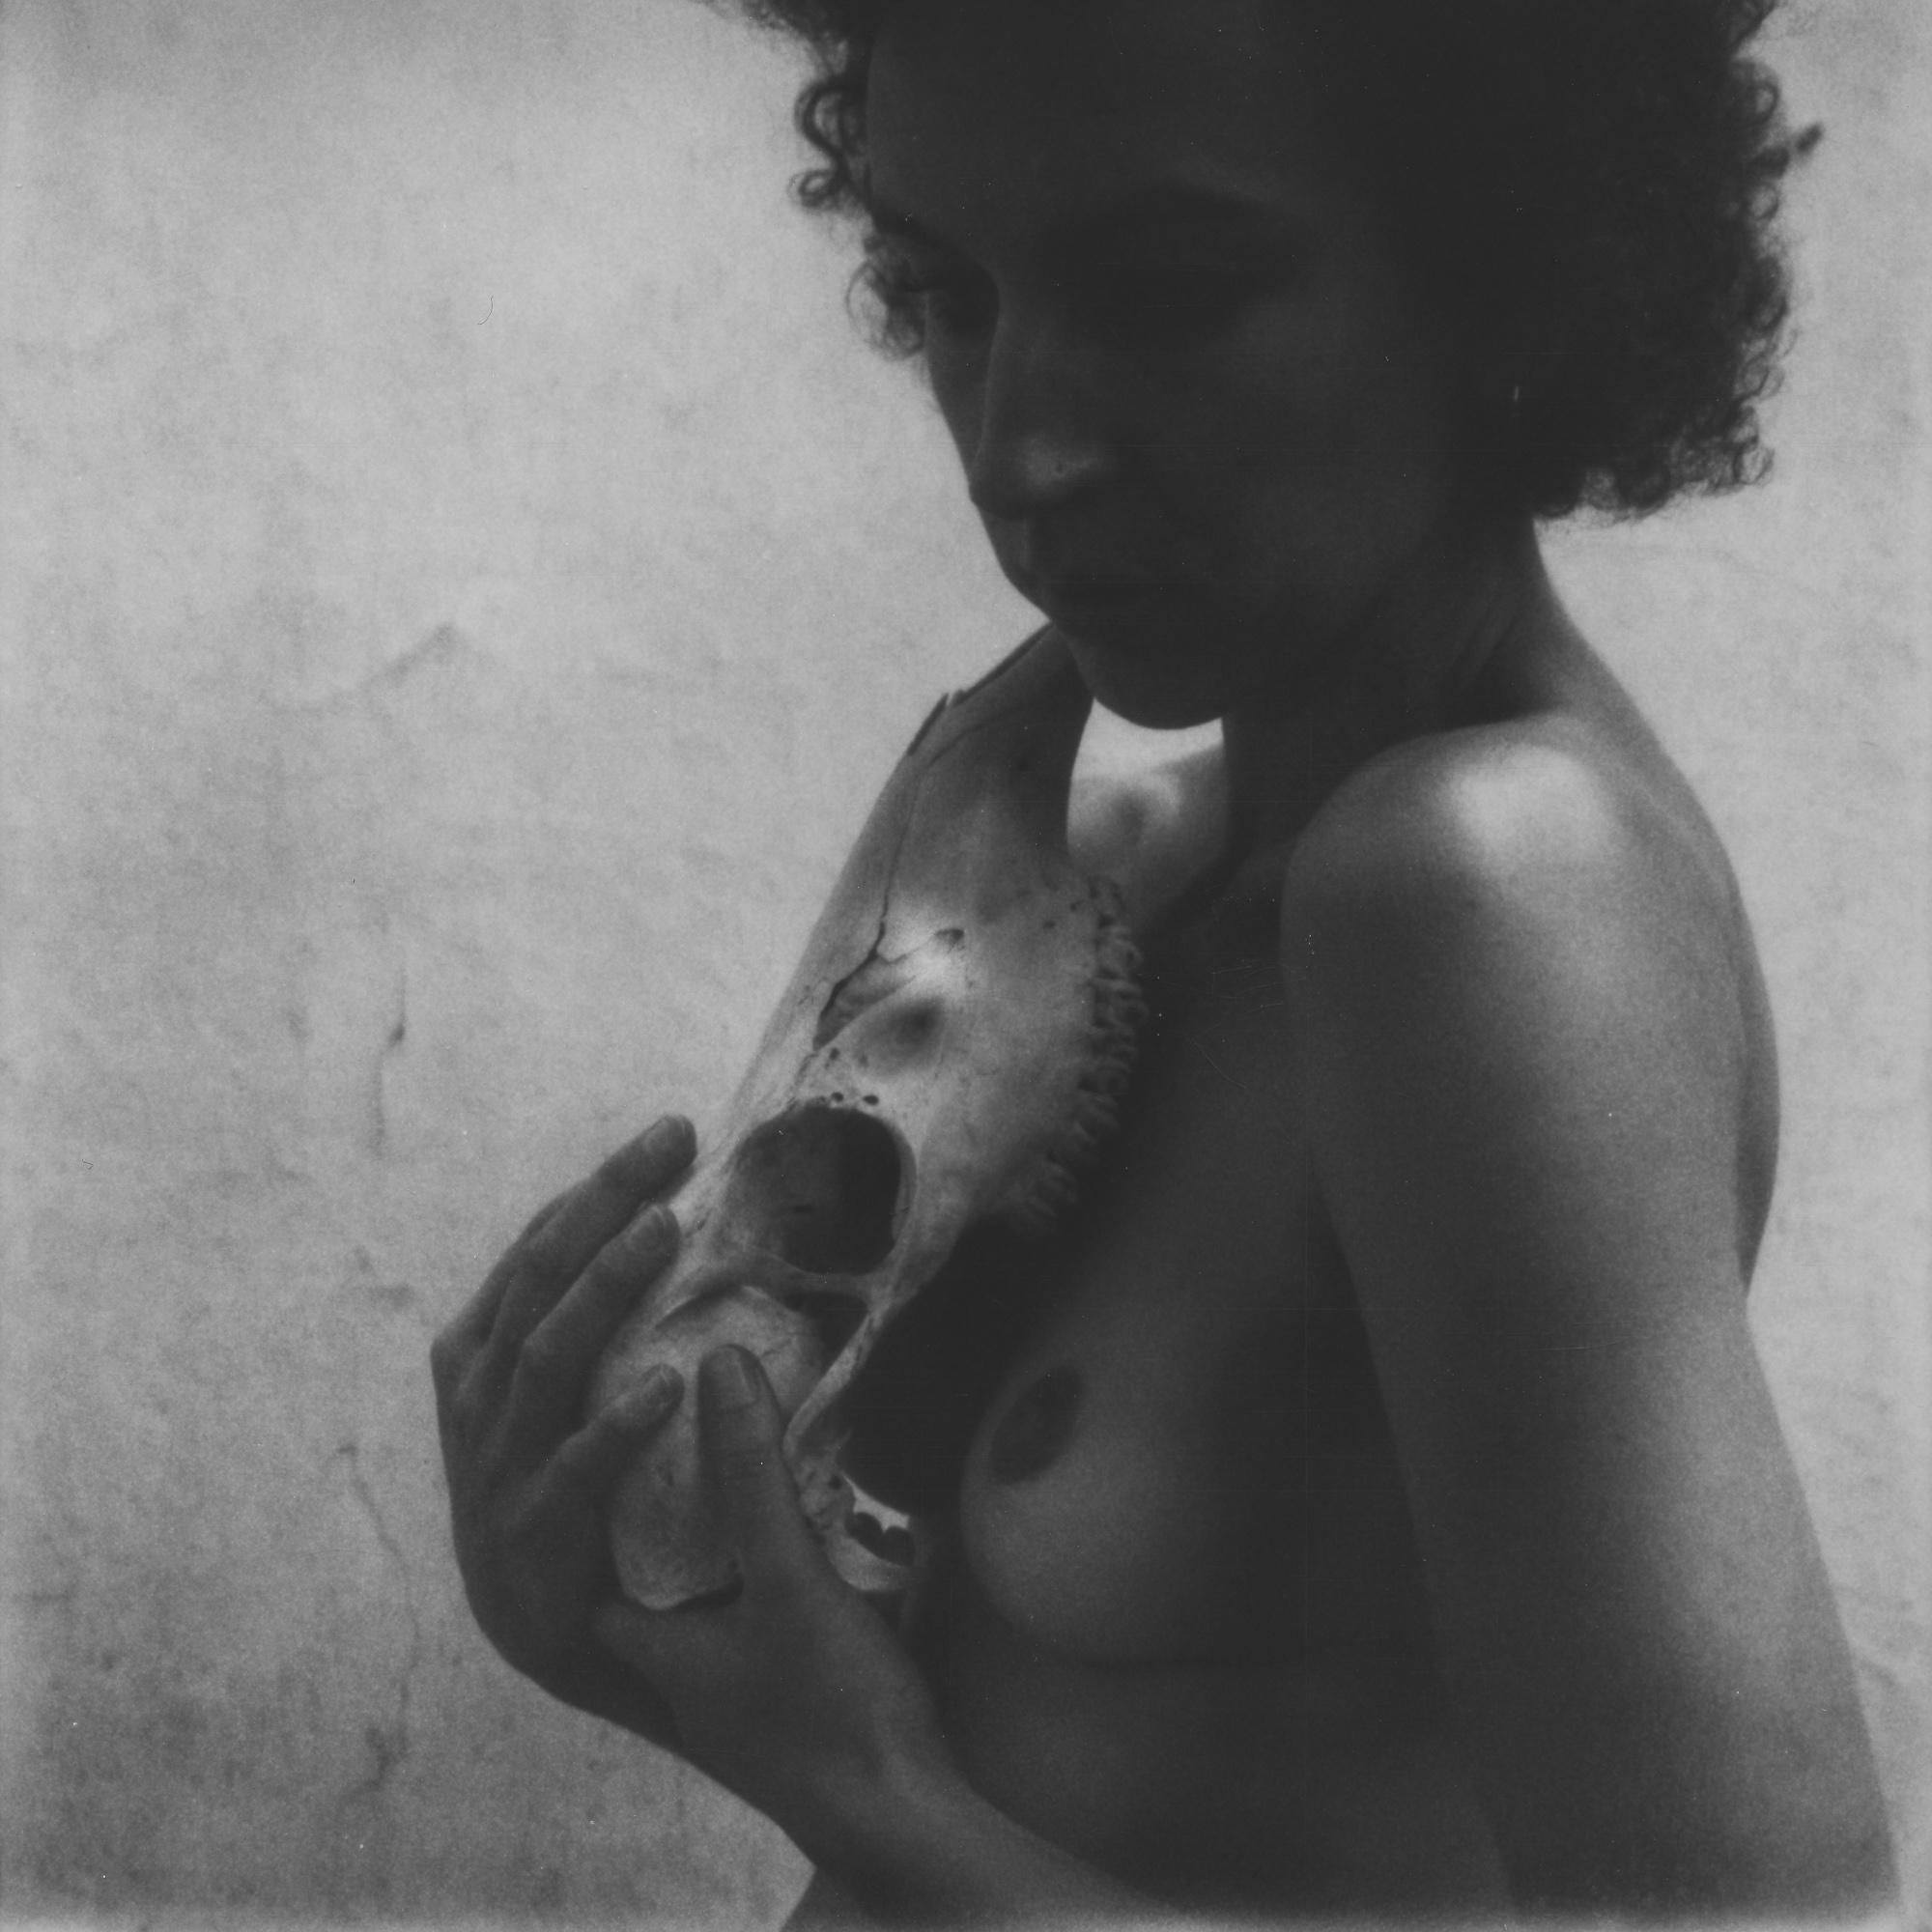 Skin and Bones II, 21st Century, Polaroid, Nude Photography, Contemporary, B&W